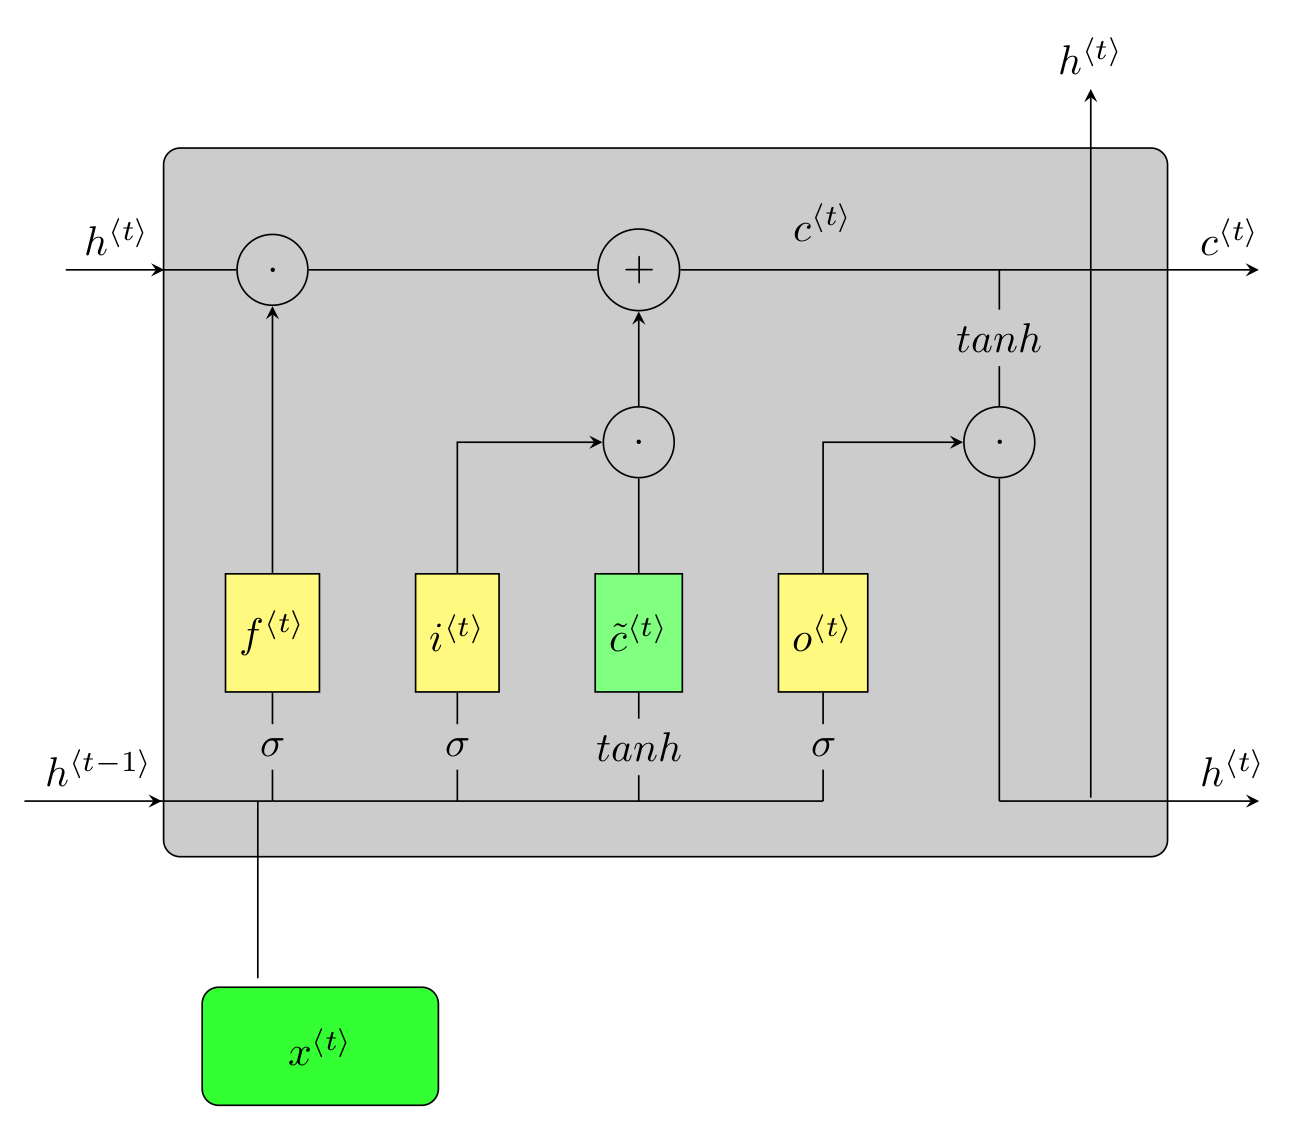 figure1.3.d_circuit_diagram-1.png